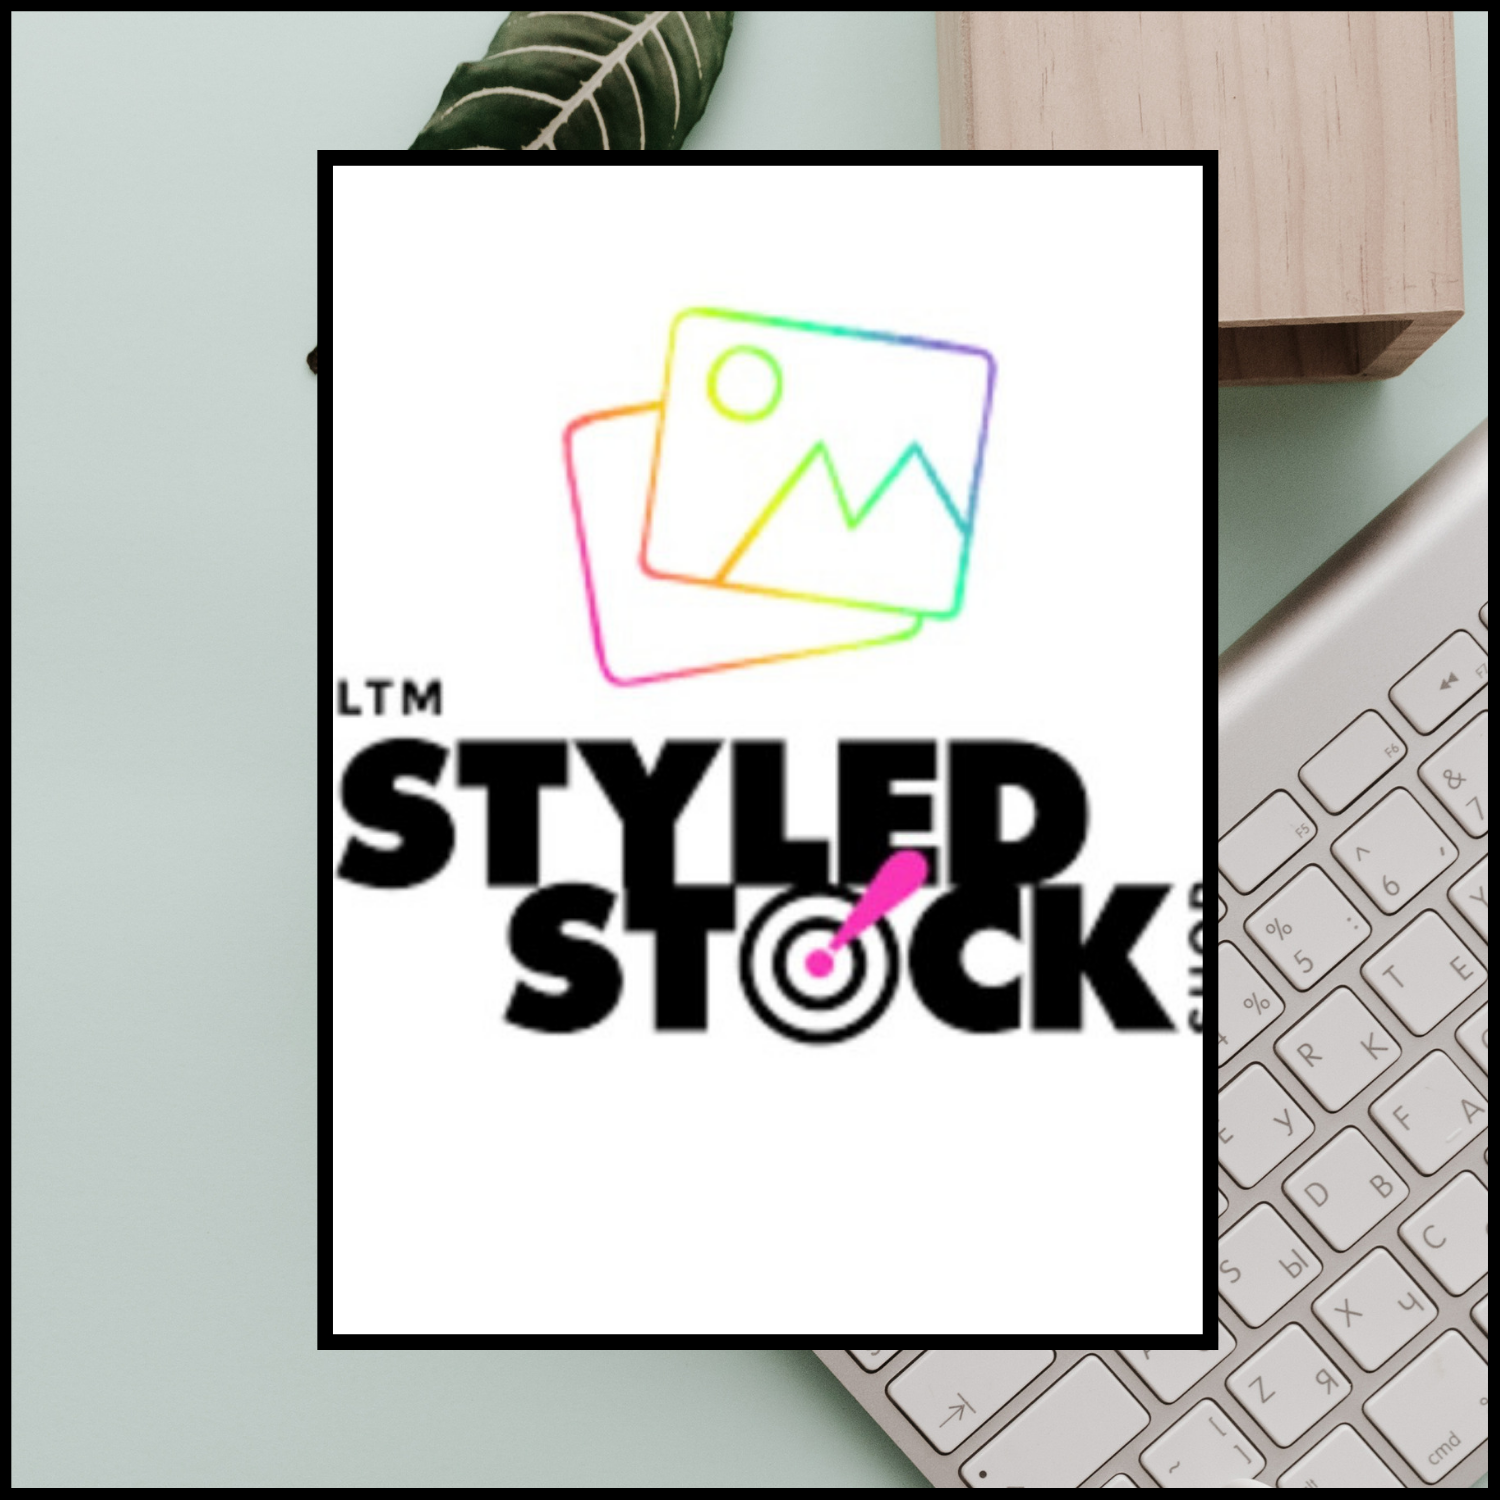 LTM Styled Stock